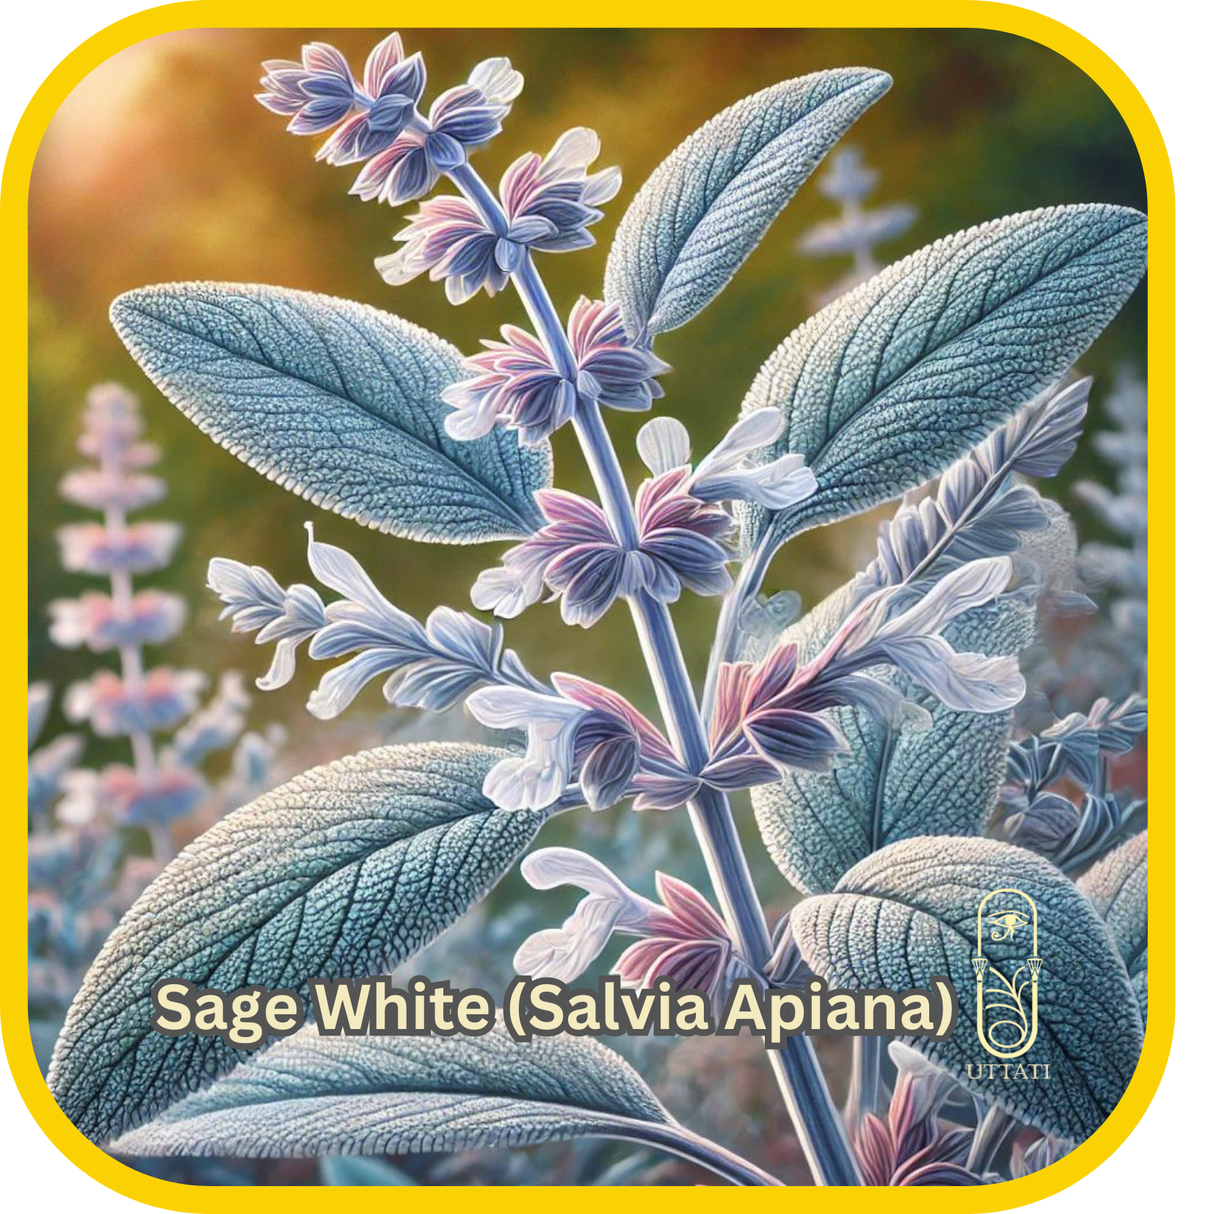 Sage white (Salvia Apiana)